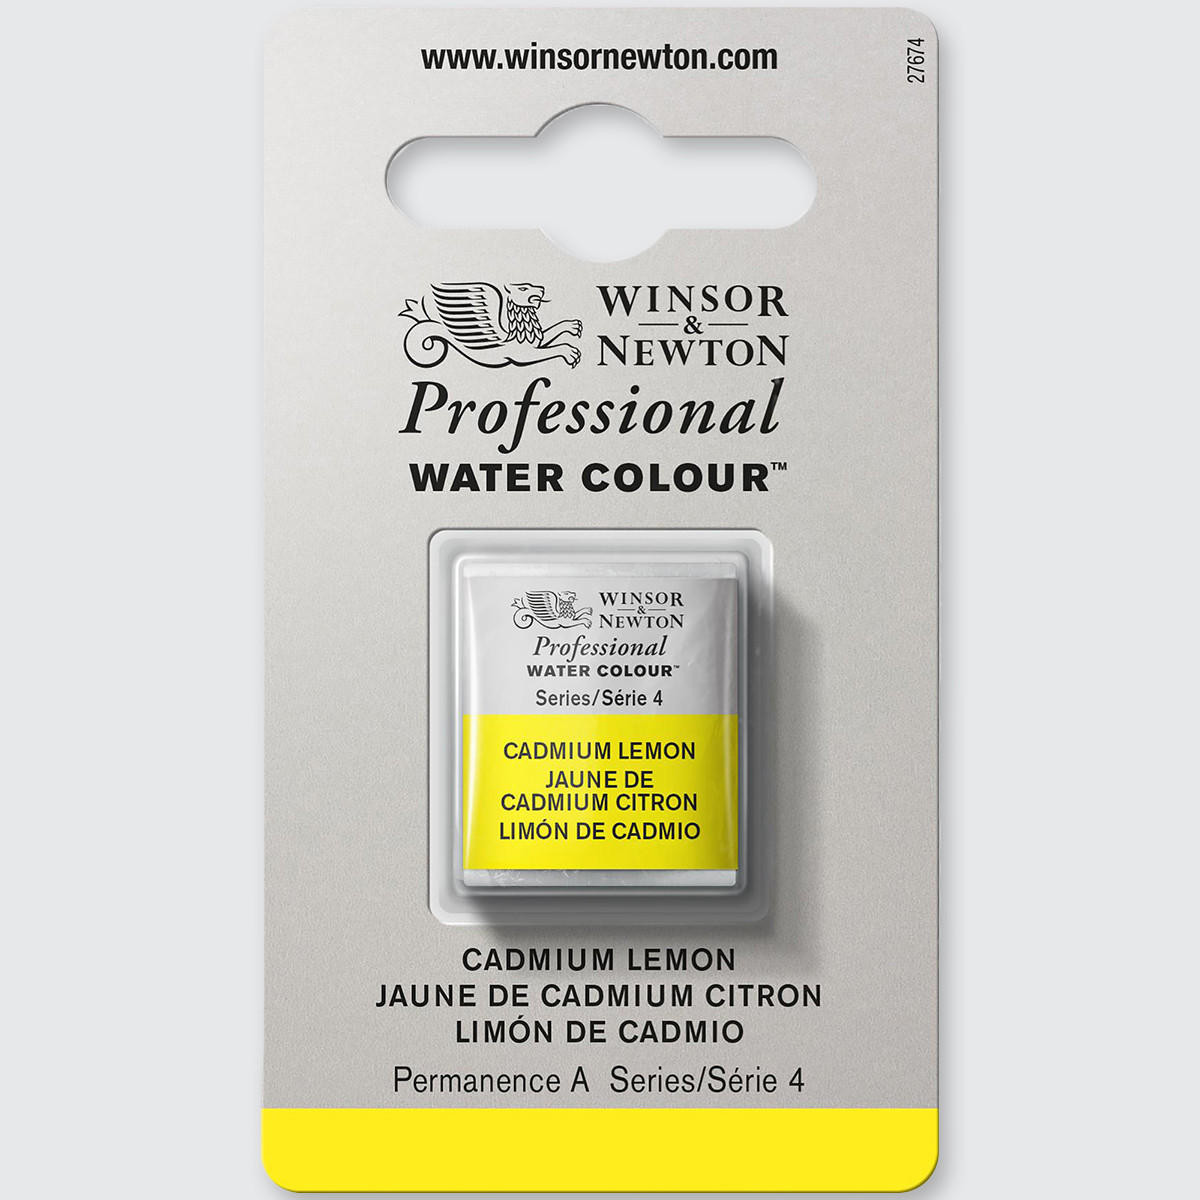 Winsor & Newton Professional Water Colour Half Pan Cadmium Lemon